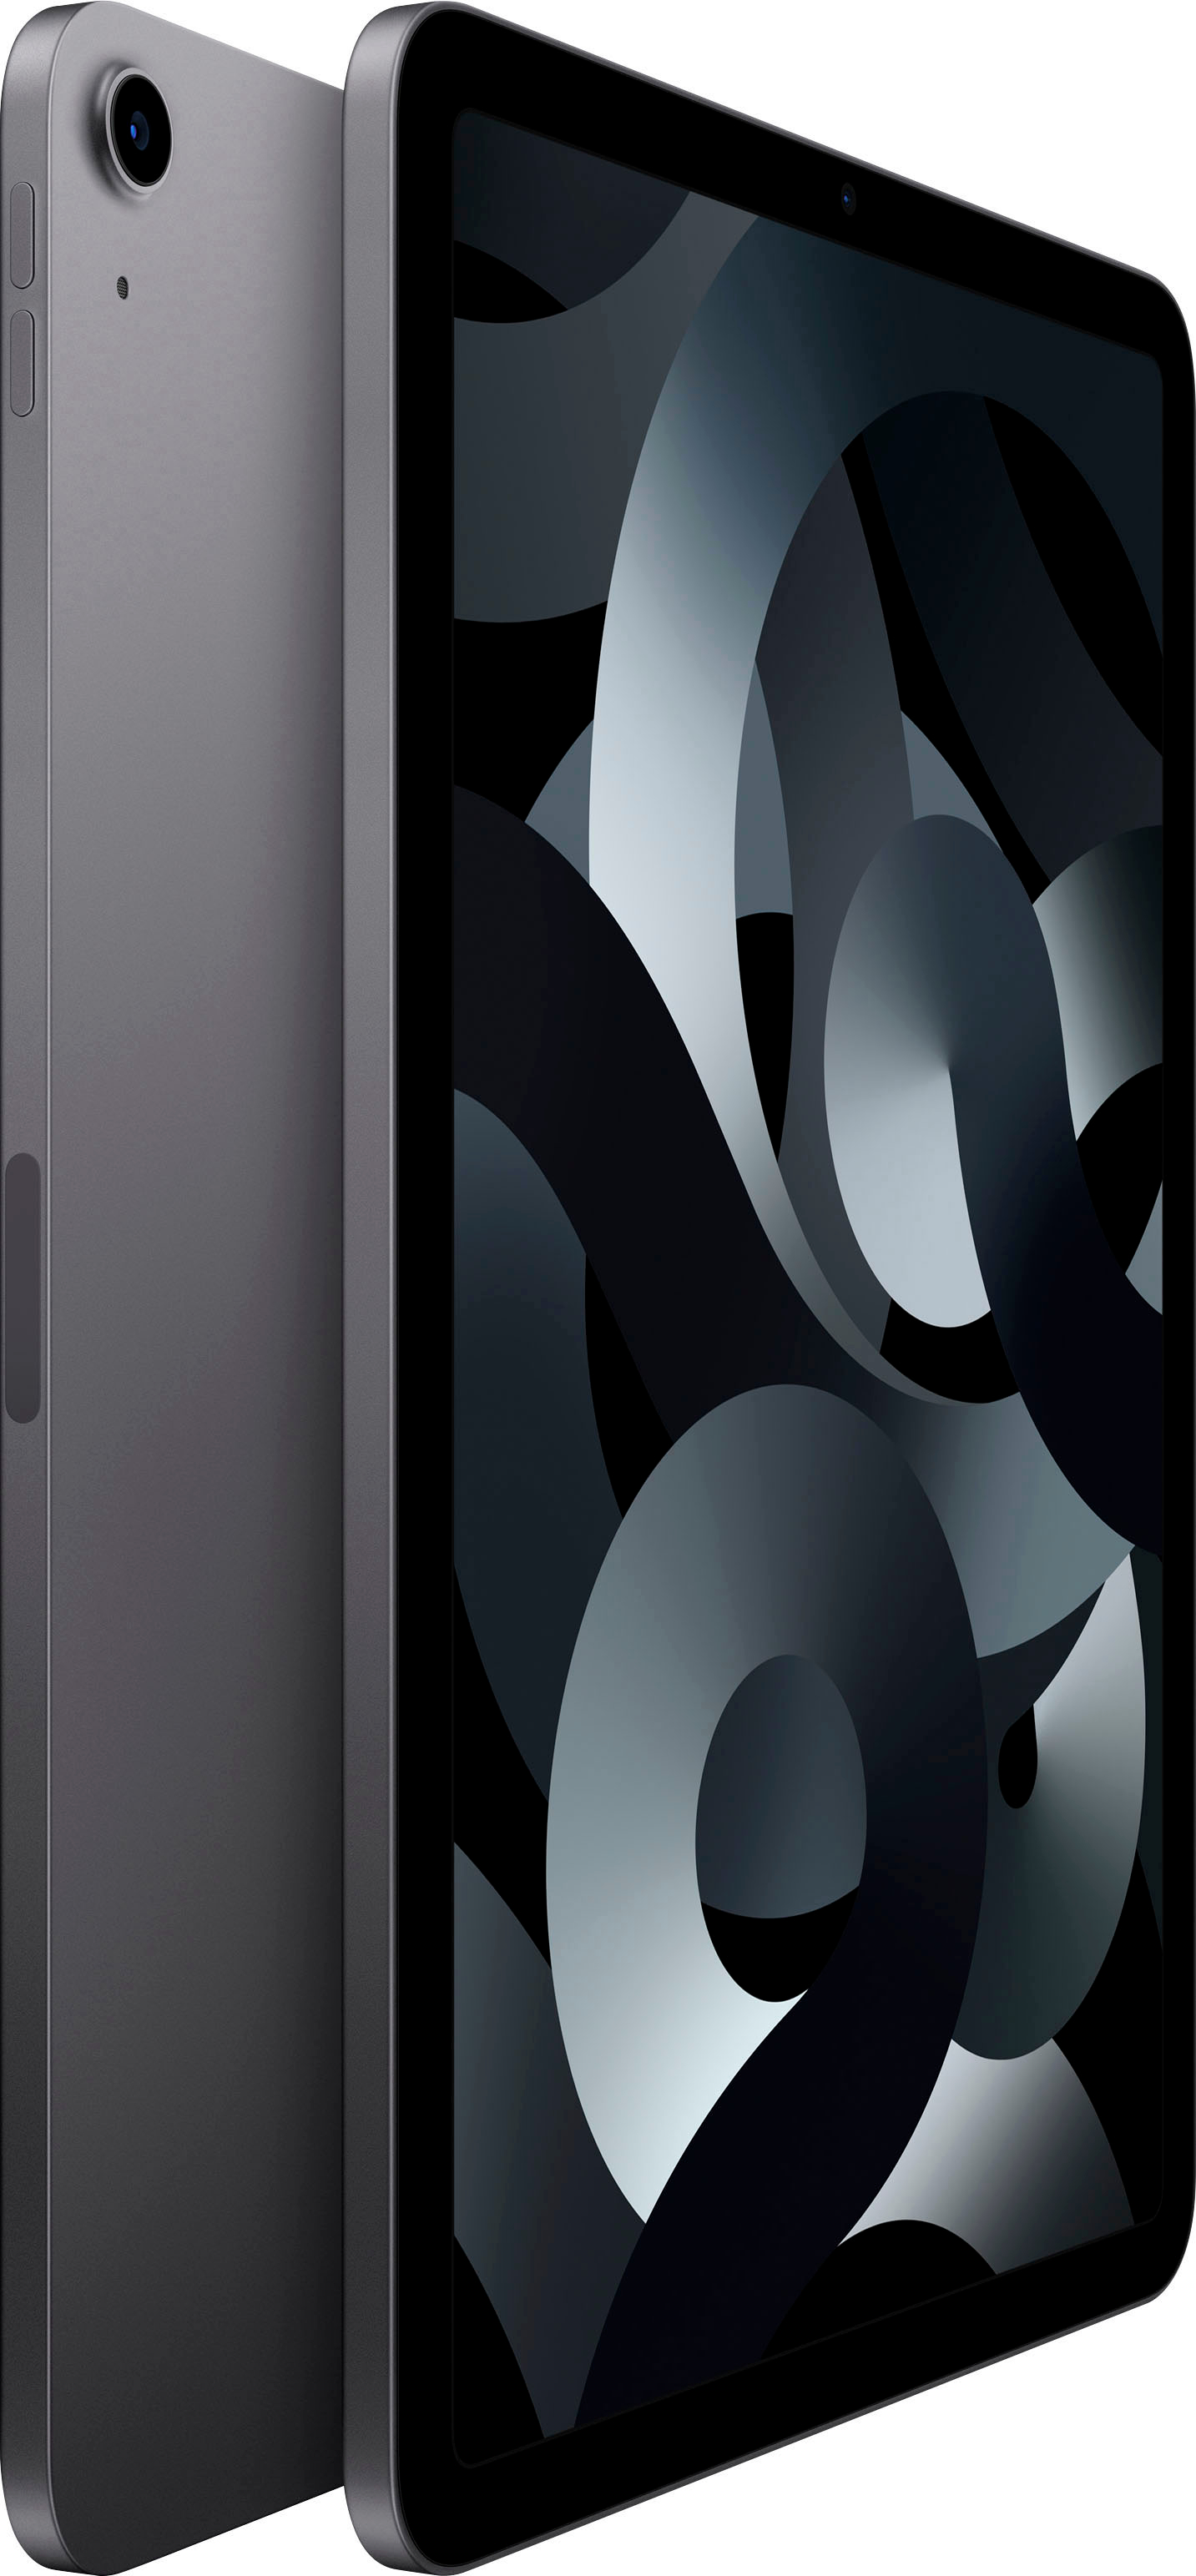  Apple iPad Mini 5th Generation (Wi-Fi + Cellular, 64GB) -  Space Gray (Renewed) : Electronics